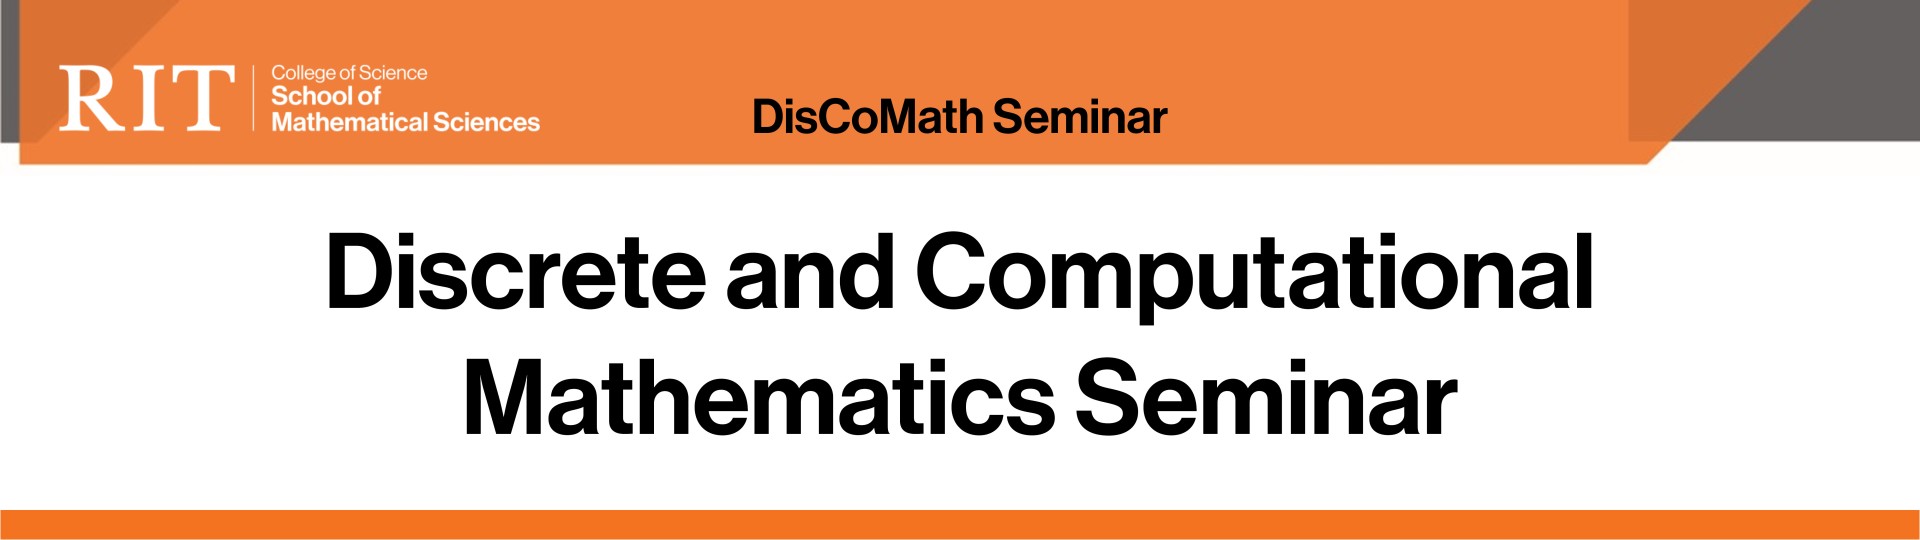 Discrete & Computational Math Seminar (DisCoMath) Cyclotomic Matrices and Graphs with q=2